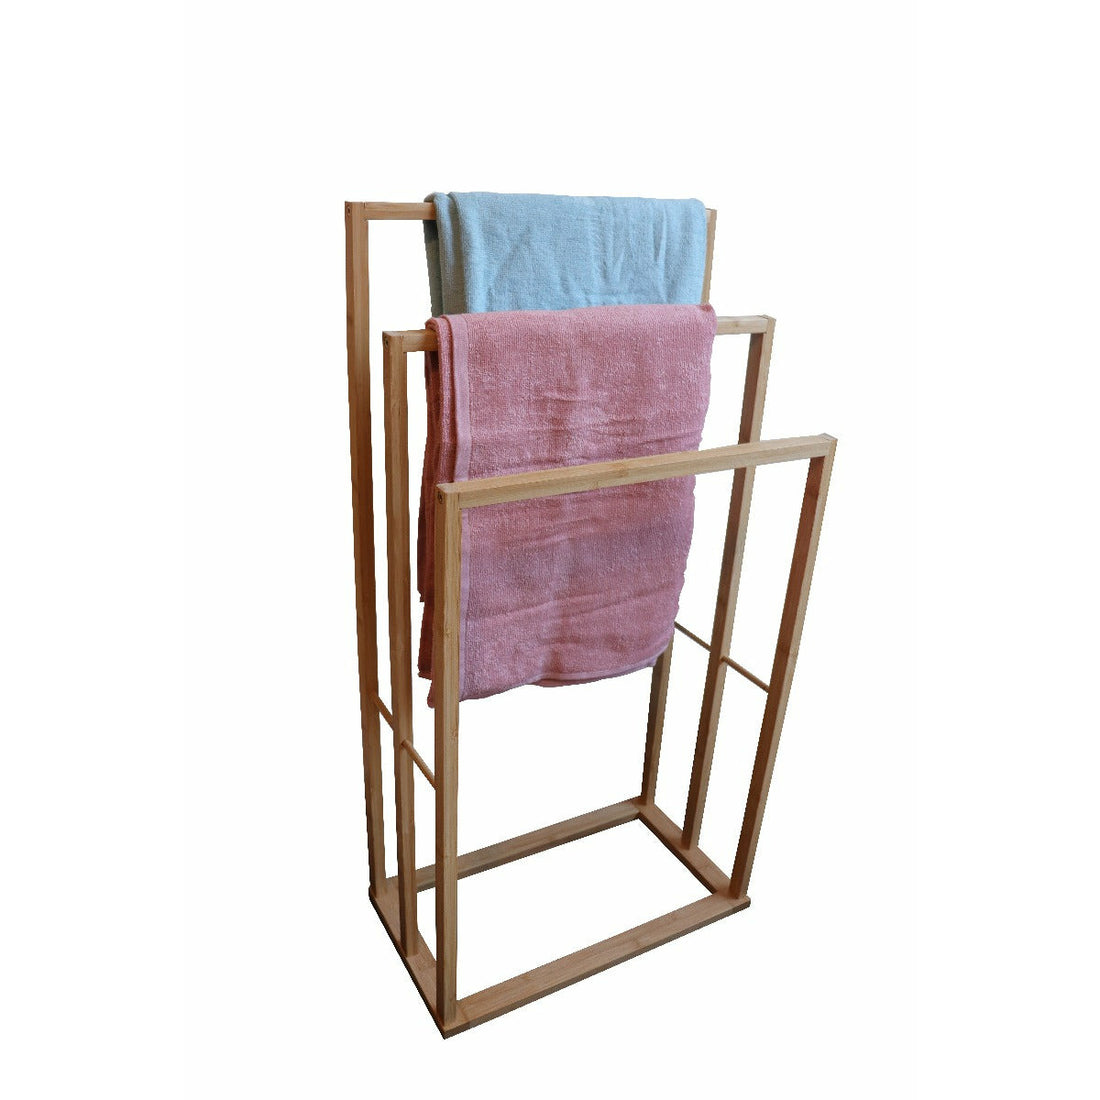 Bamboo Towel Bar Holder Rack 3-Tier